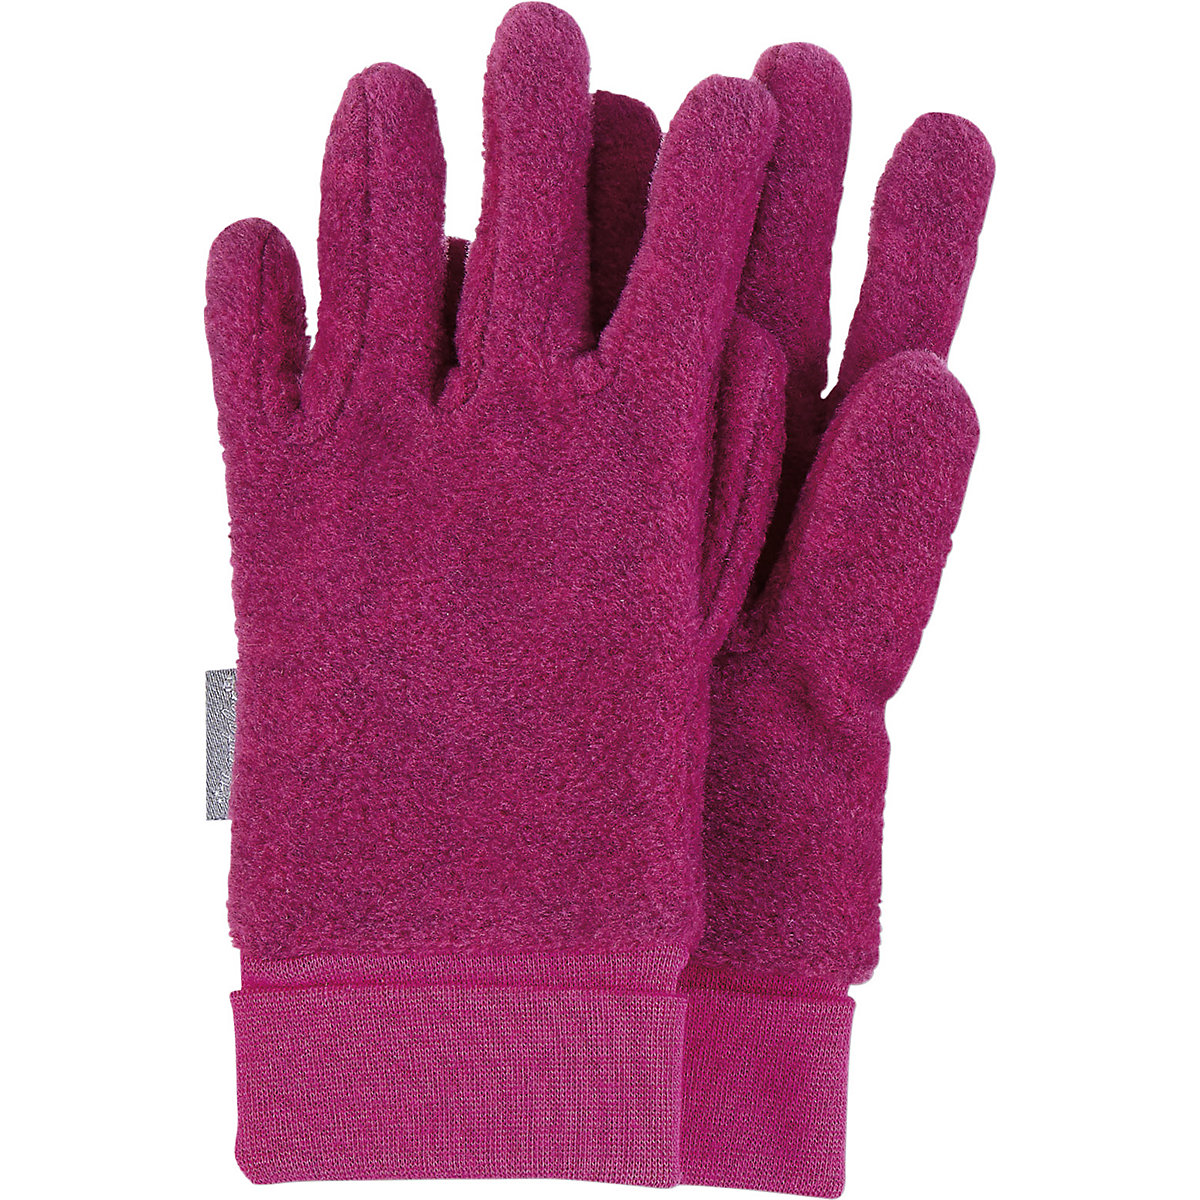 Handschuhe Fingerlinge pink 2 Sterntaler